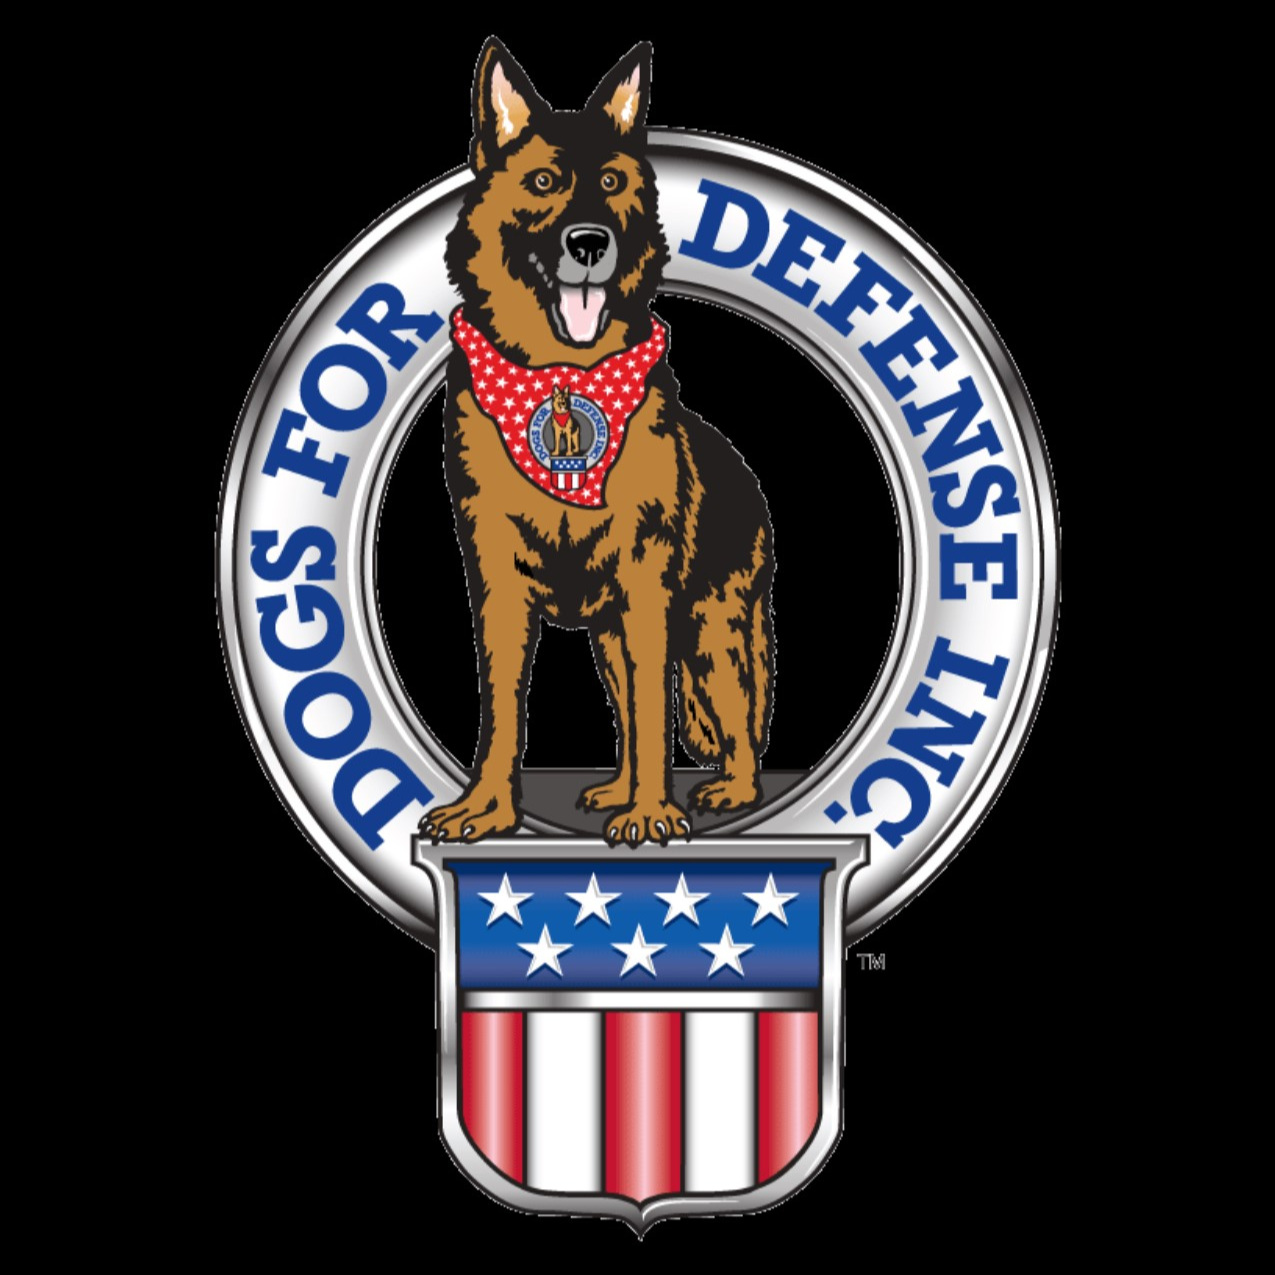 Dogs for Defense Inc. Logo